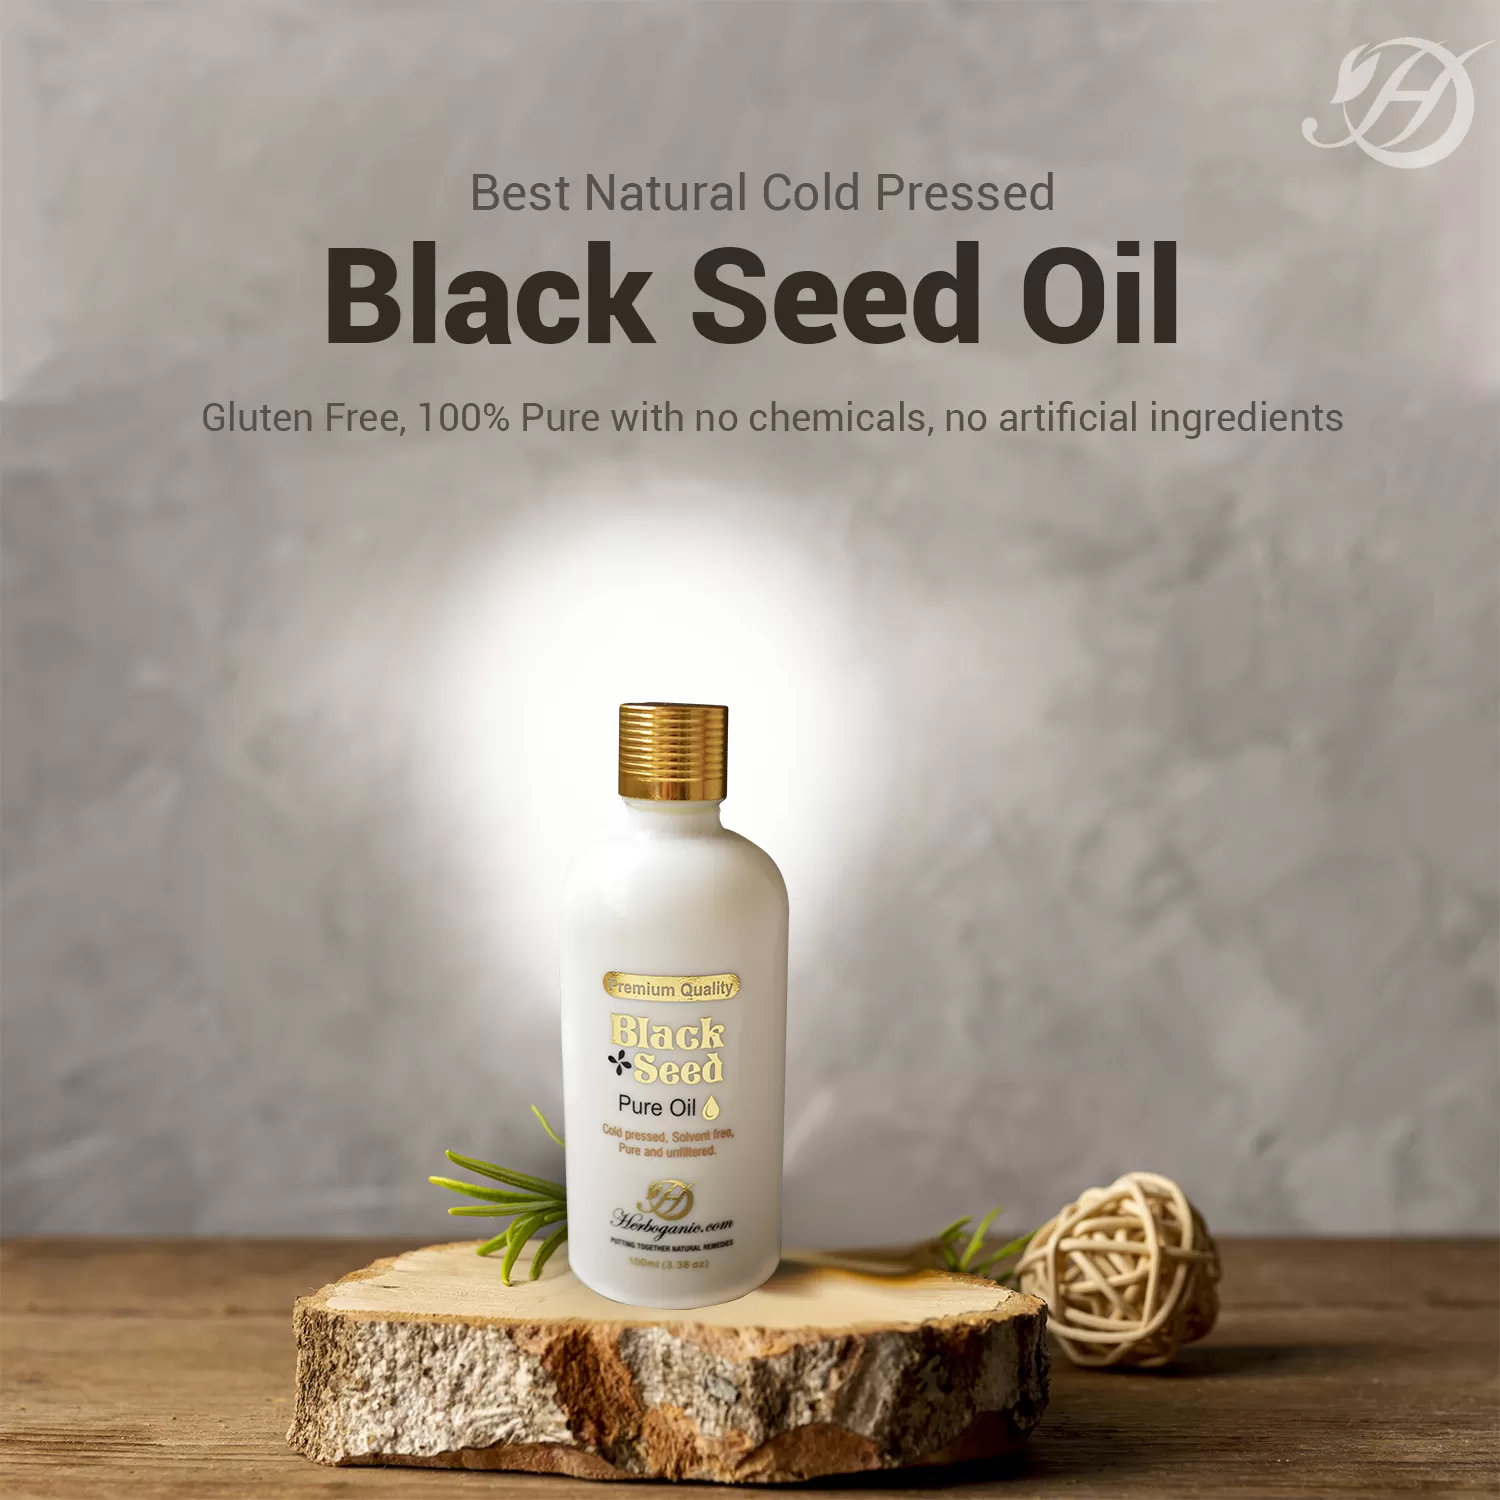 Black Seed Oil for Diabetic